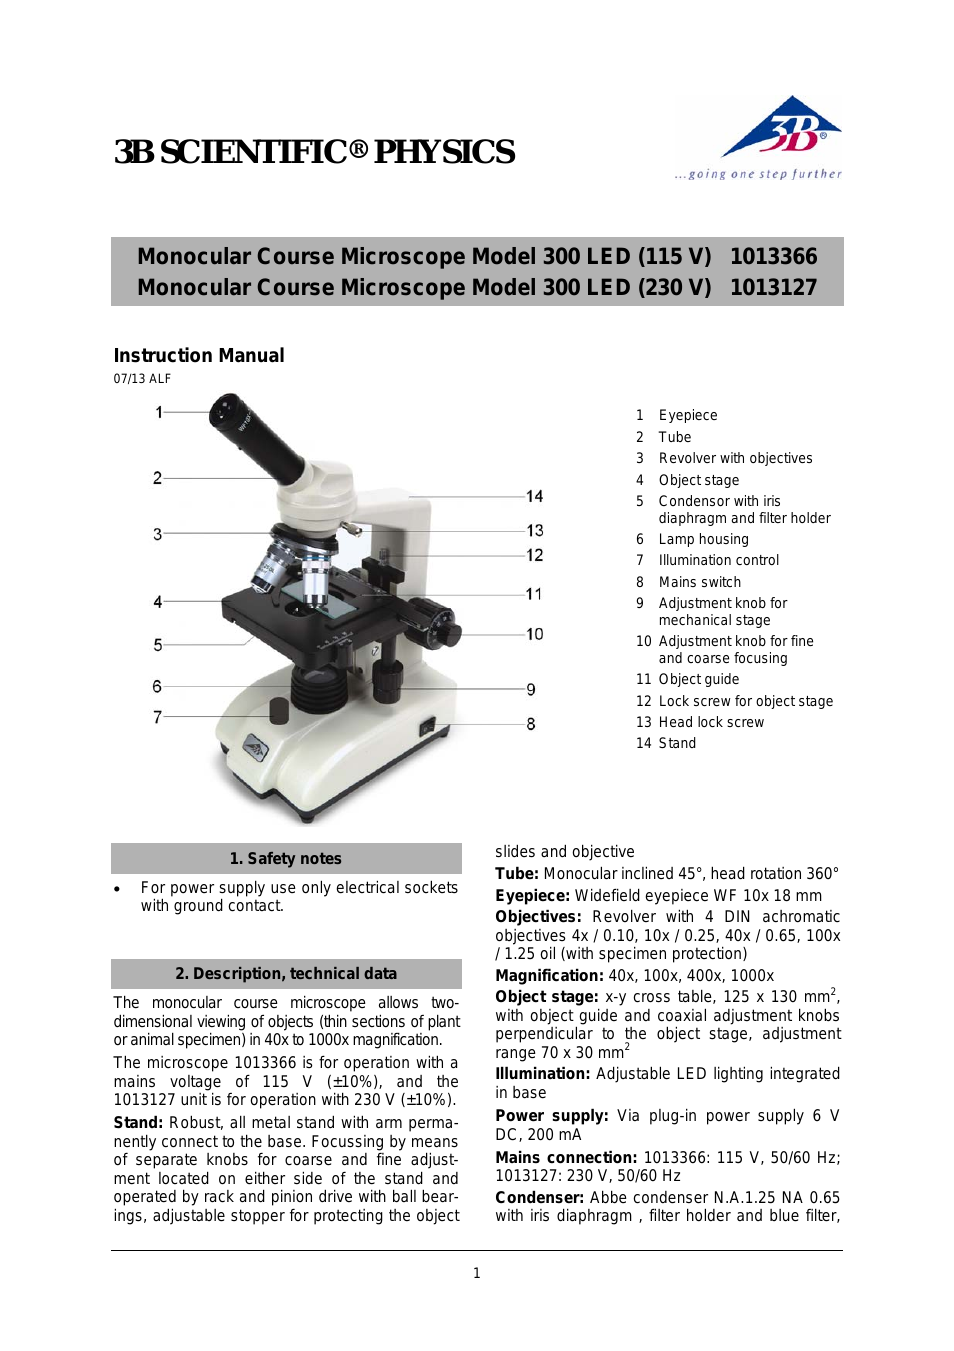 Monocular Course Microscope Model 300 LED (230 V, 50__60 Hz)